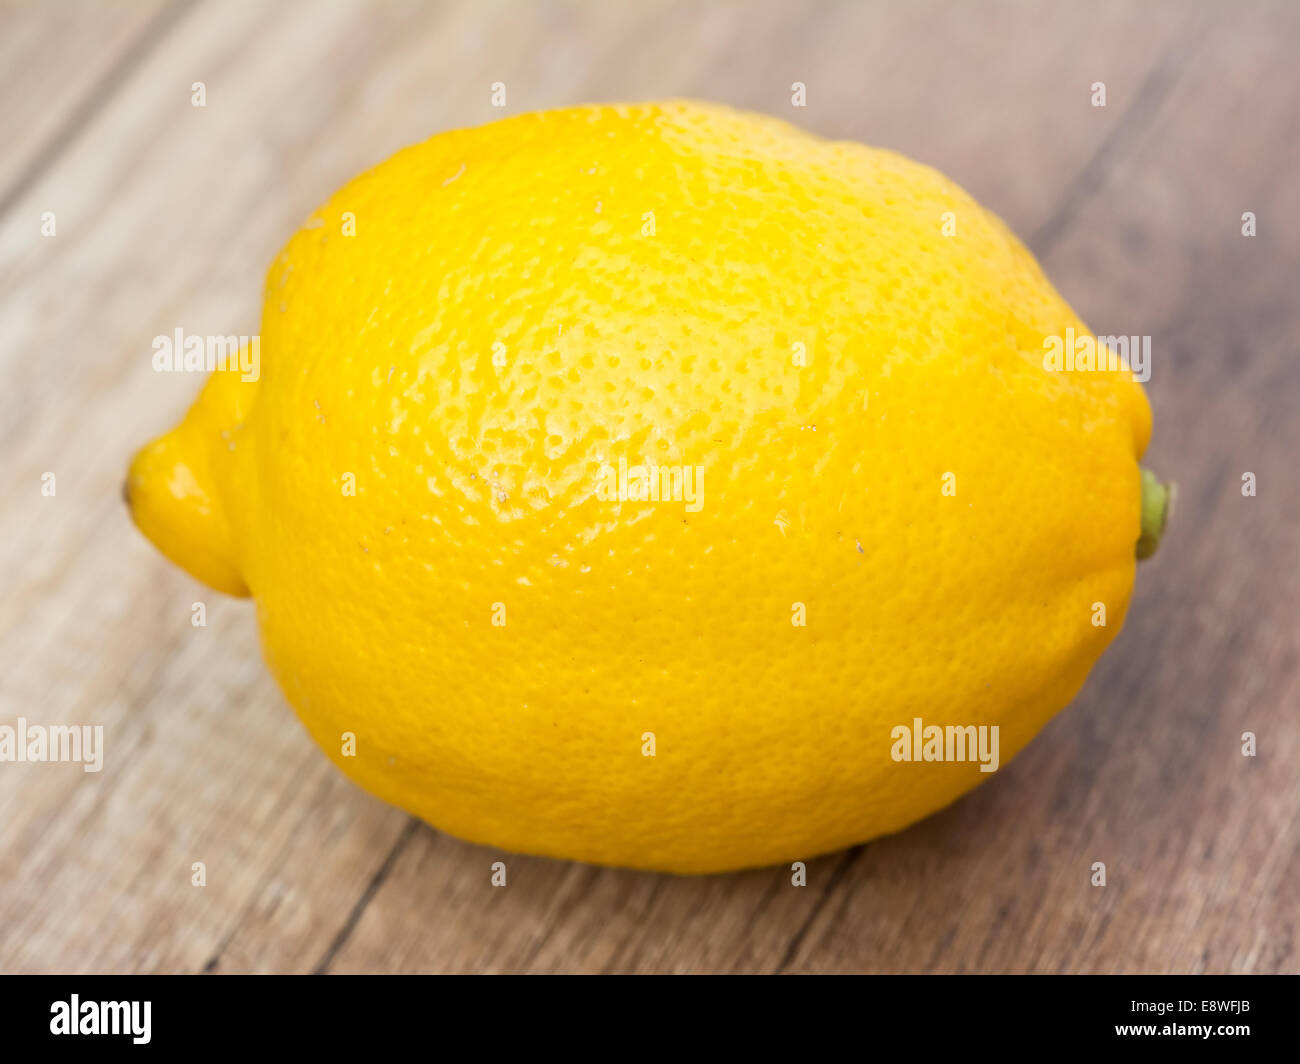 Whole Lemon On Wood Table Stock Photo